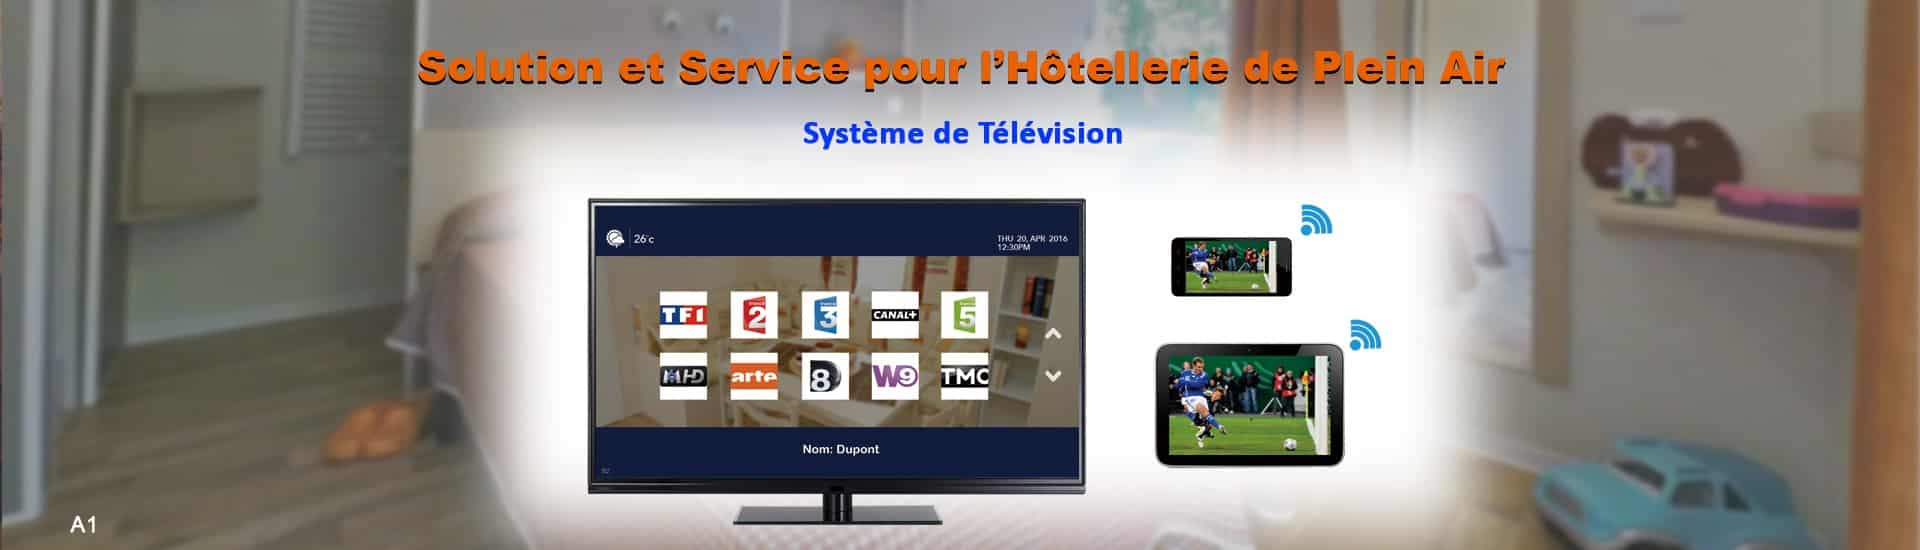 Banner - Service TV